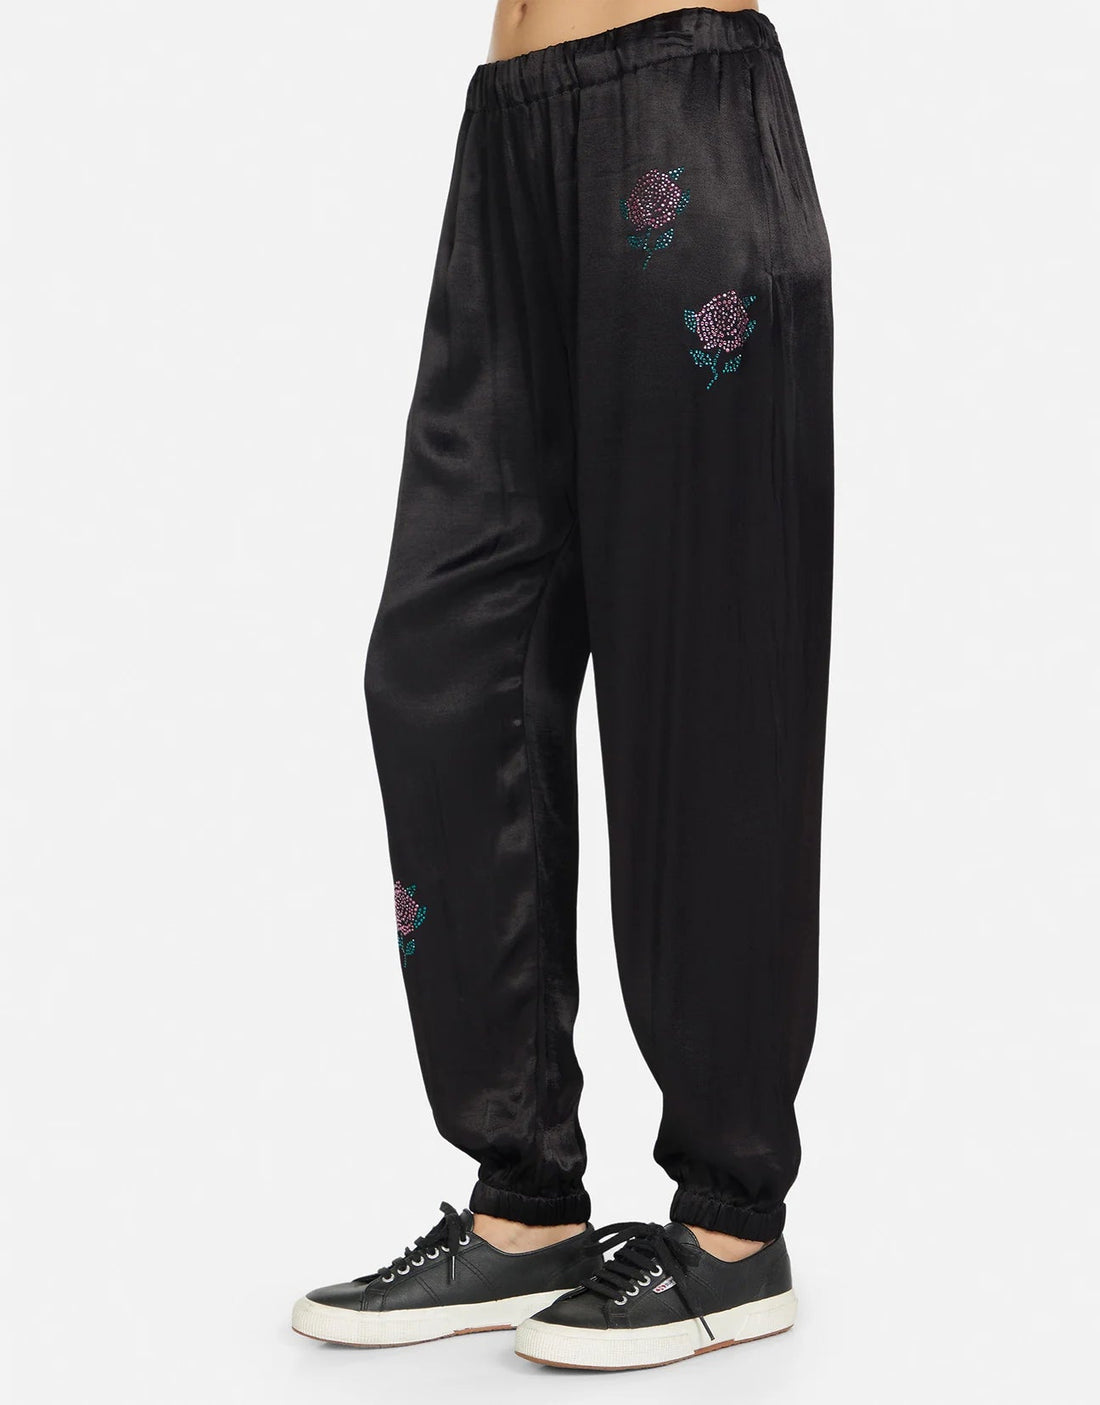 Shop Lauren Moshi Chantria Crystal Roses Sweatpants - Premium Sweatpants from Lauren Moshi Online now at Spoiled Brat 